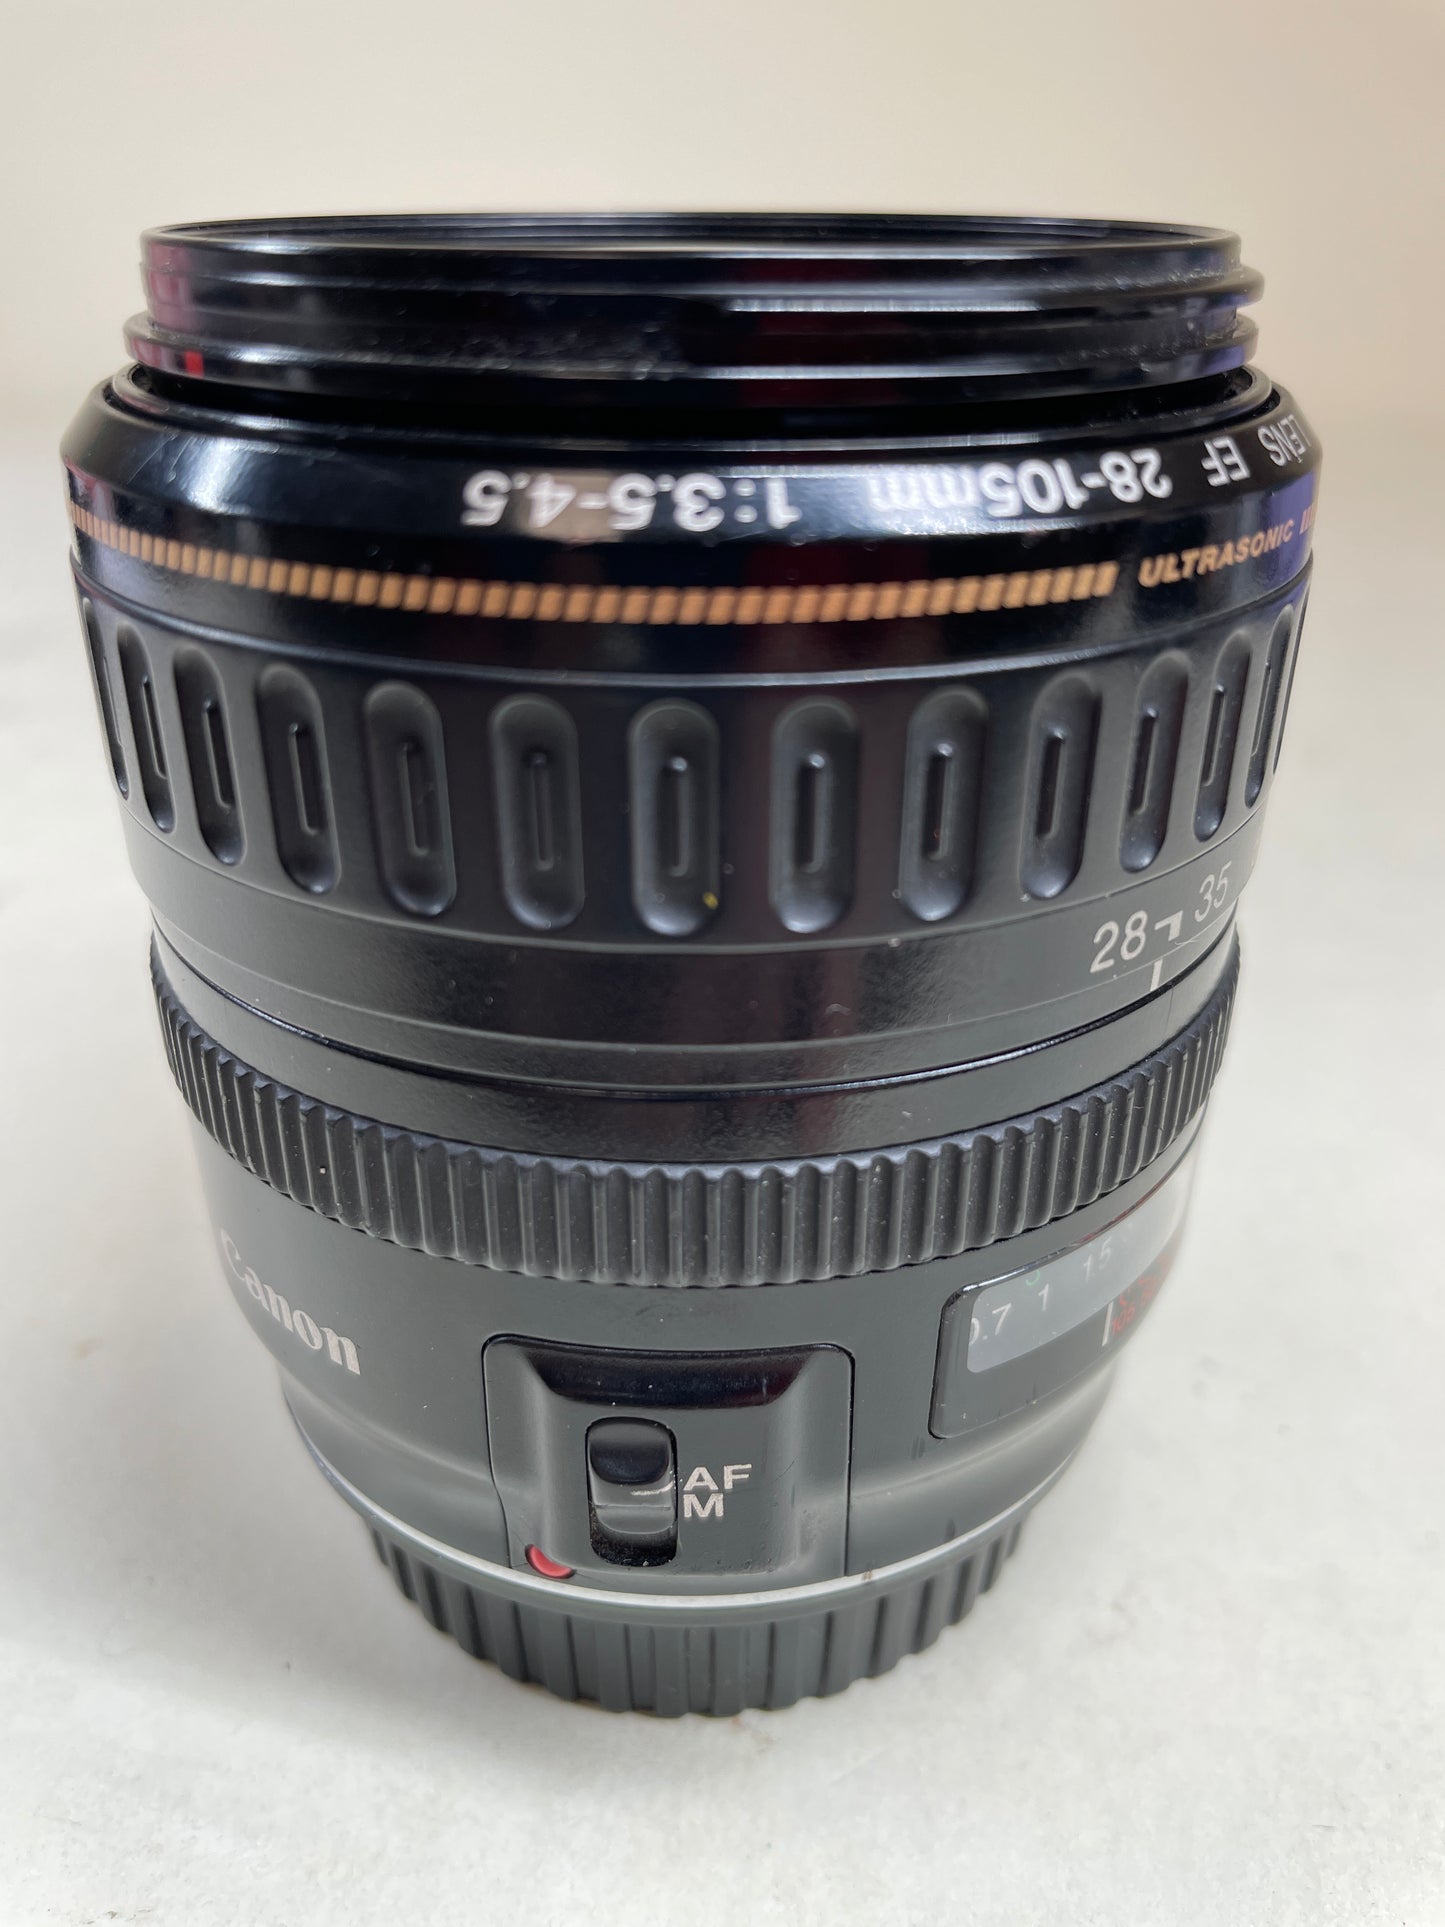 Canon EF Ultrasonic Zoom Lens 28-105mm f/3.5-4.5